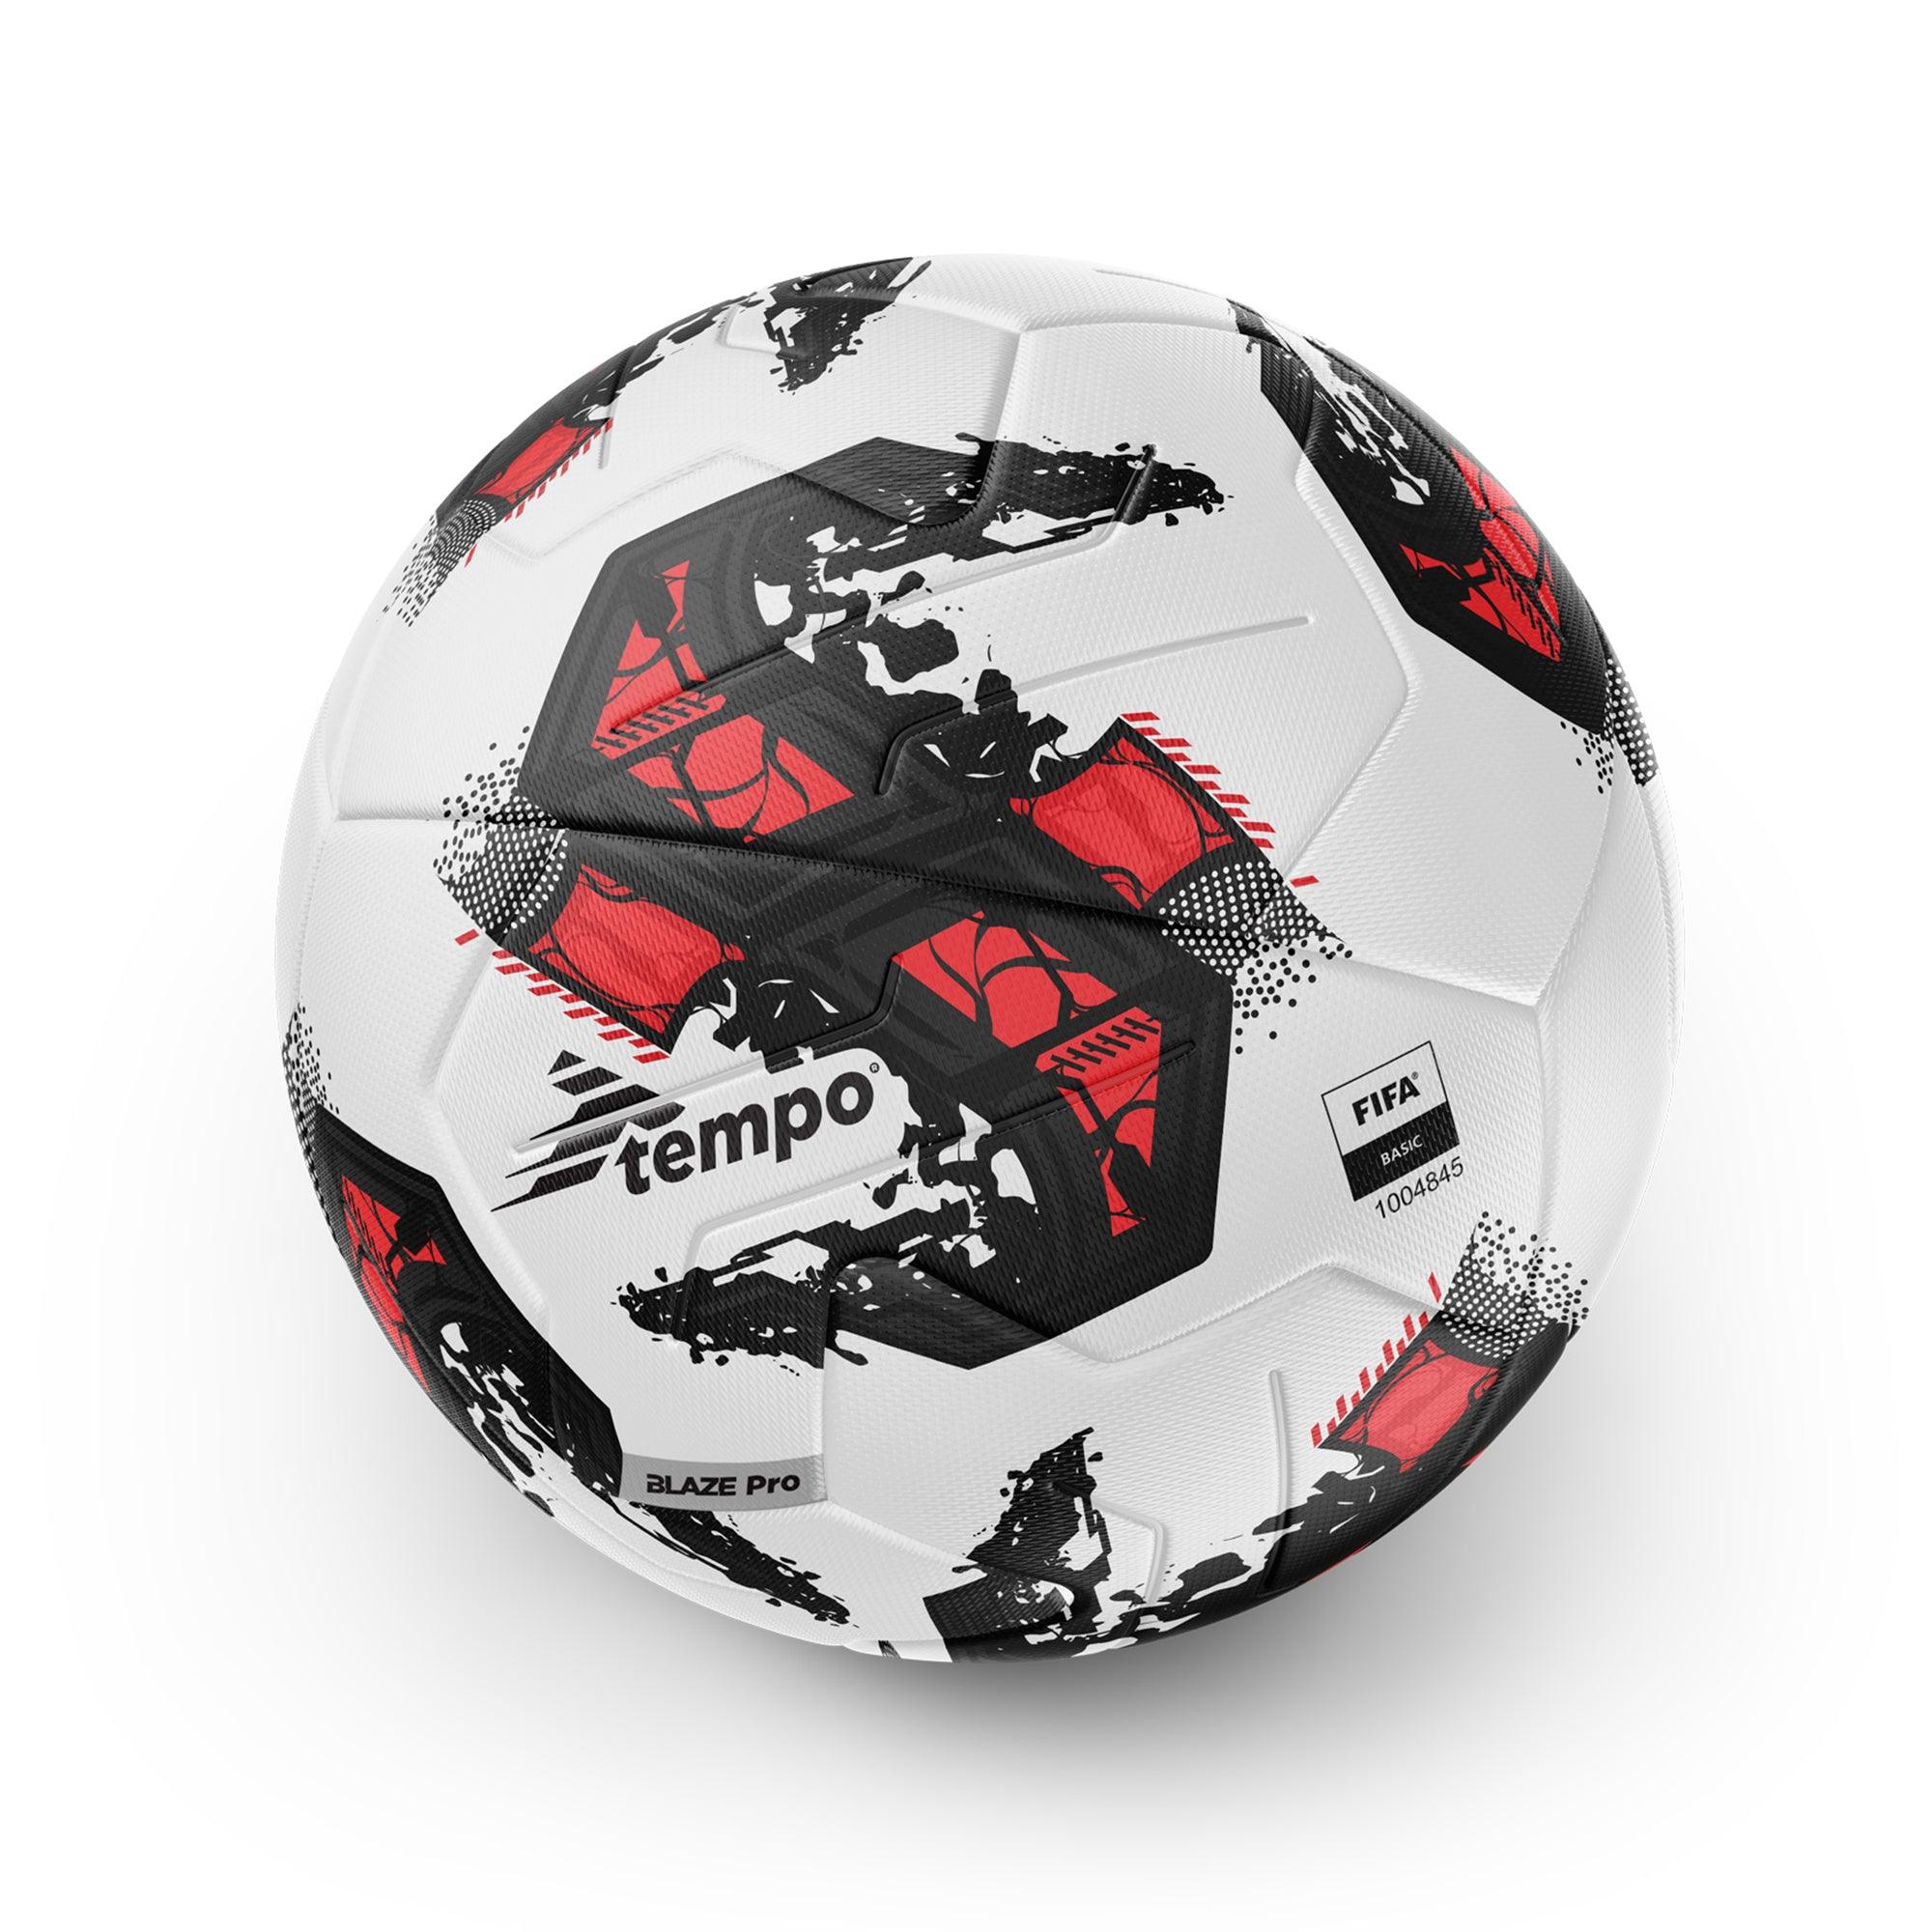 BLAZE Pro Black/Red FIFA Basic Size 5 - Tempo Sport